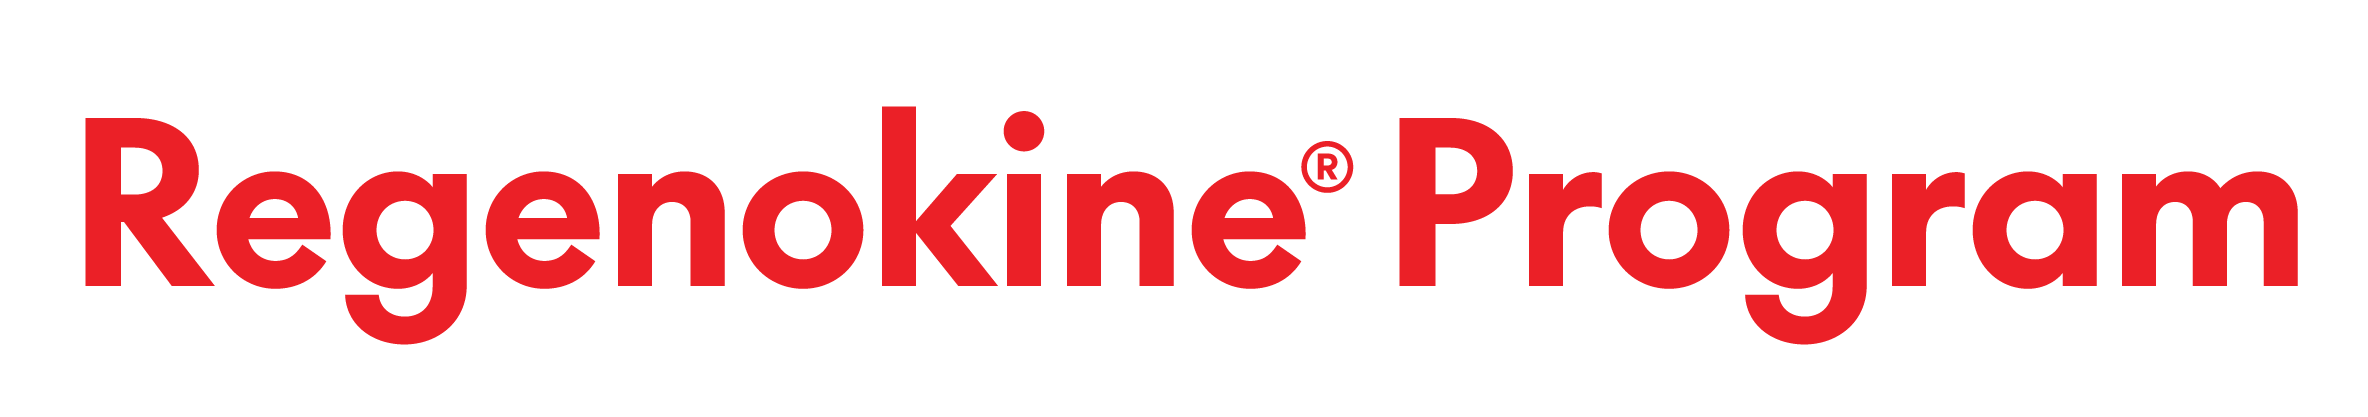 logo of Regenokine Program